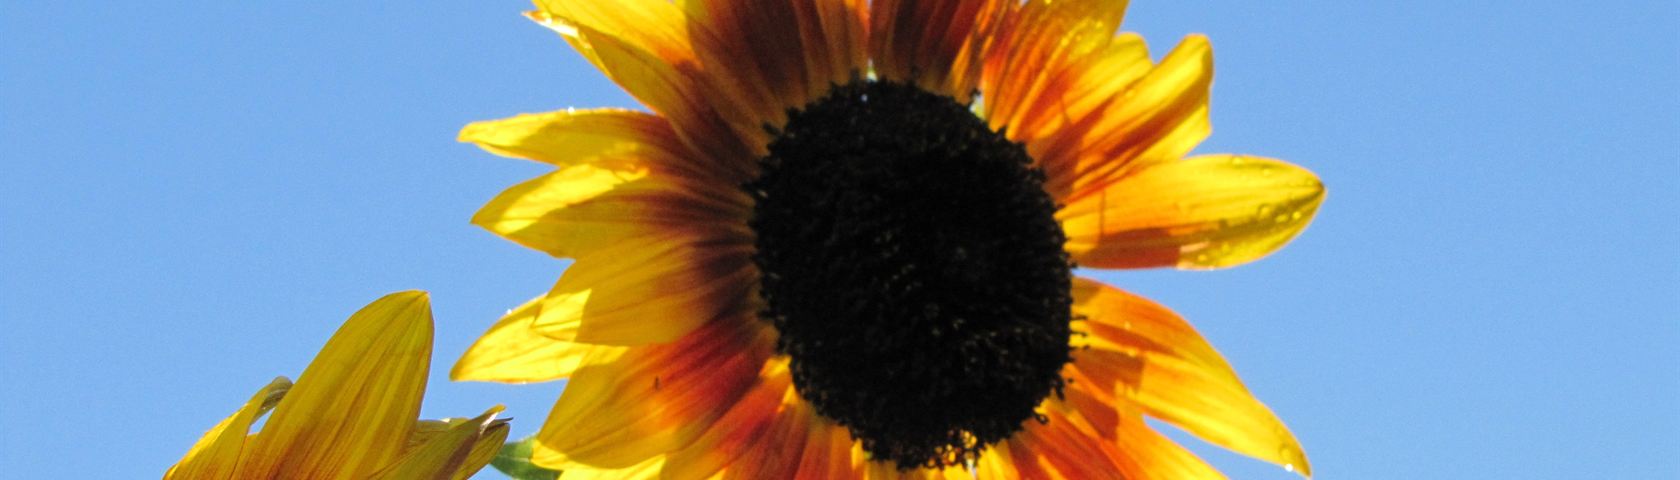 Sunflower on Sky Backgound